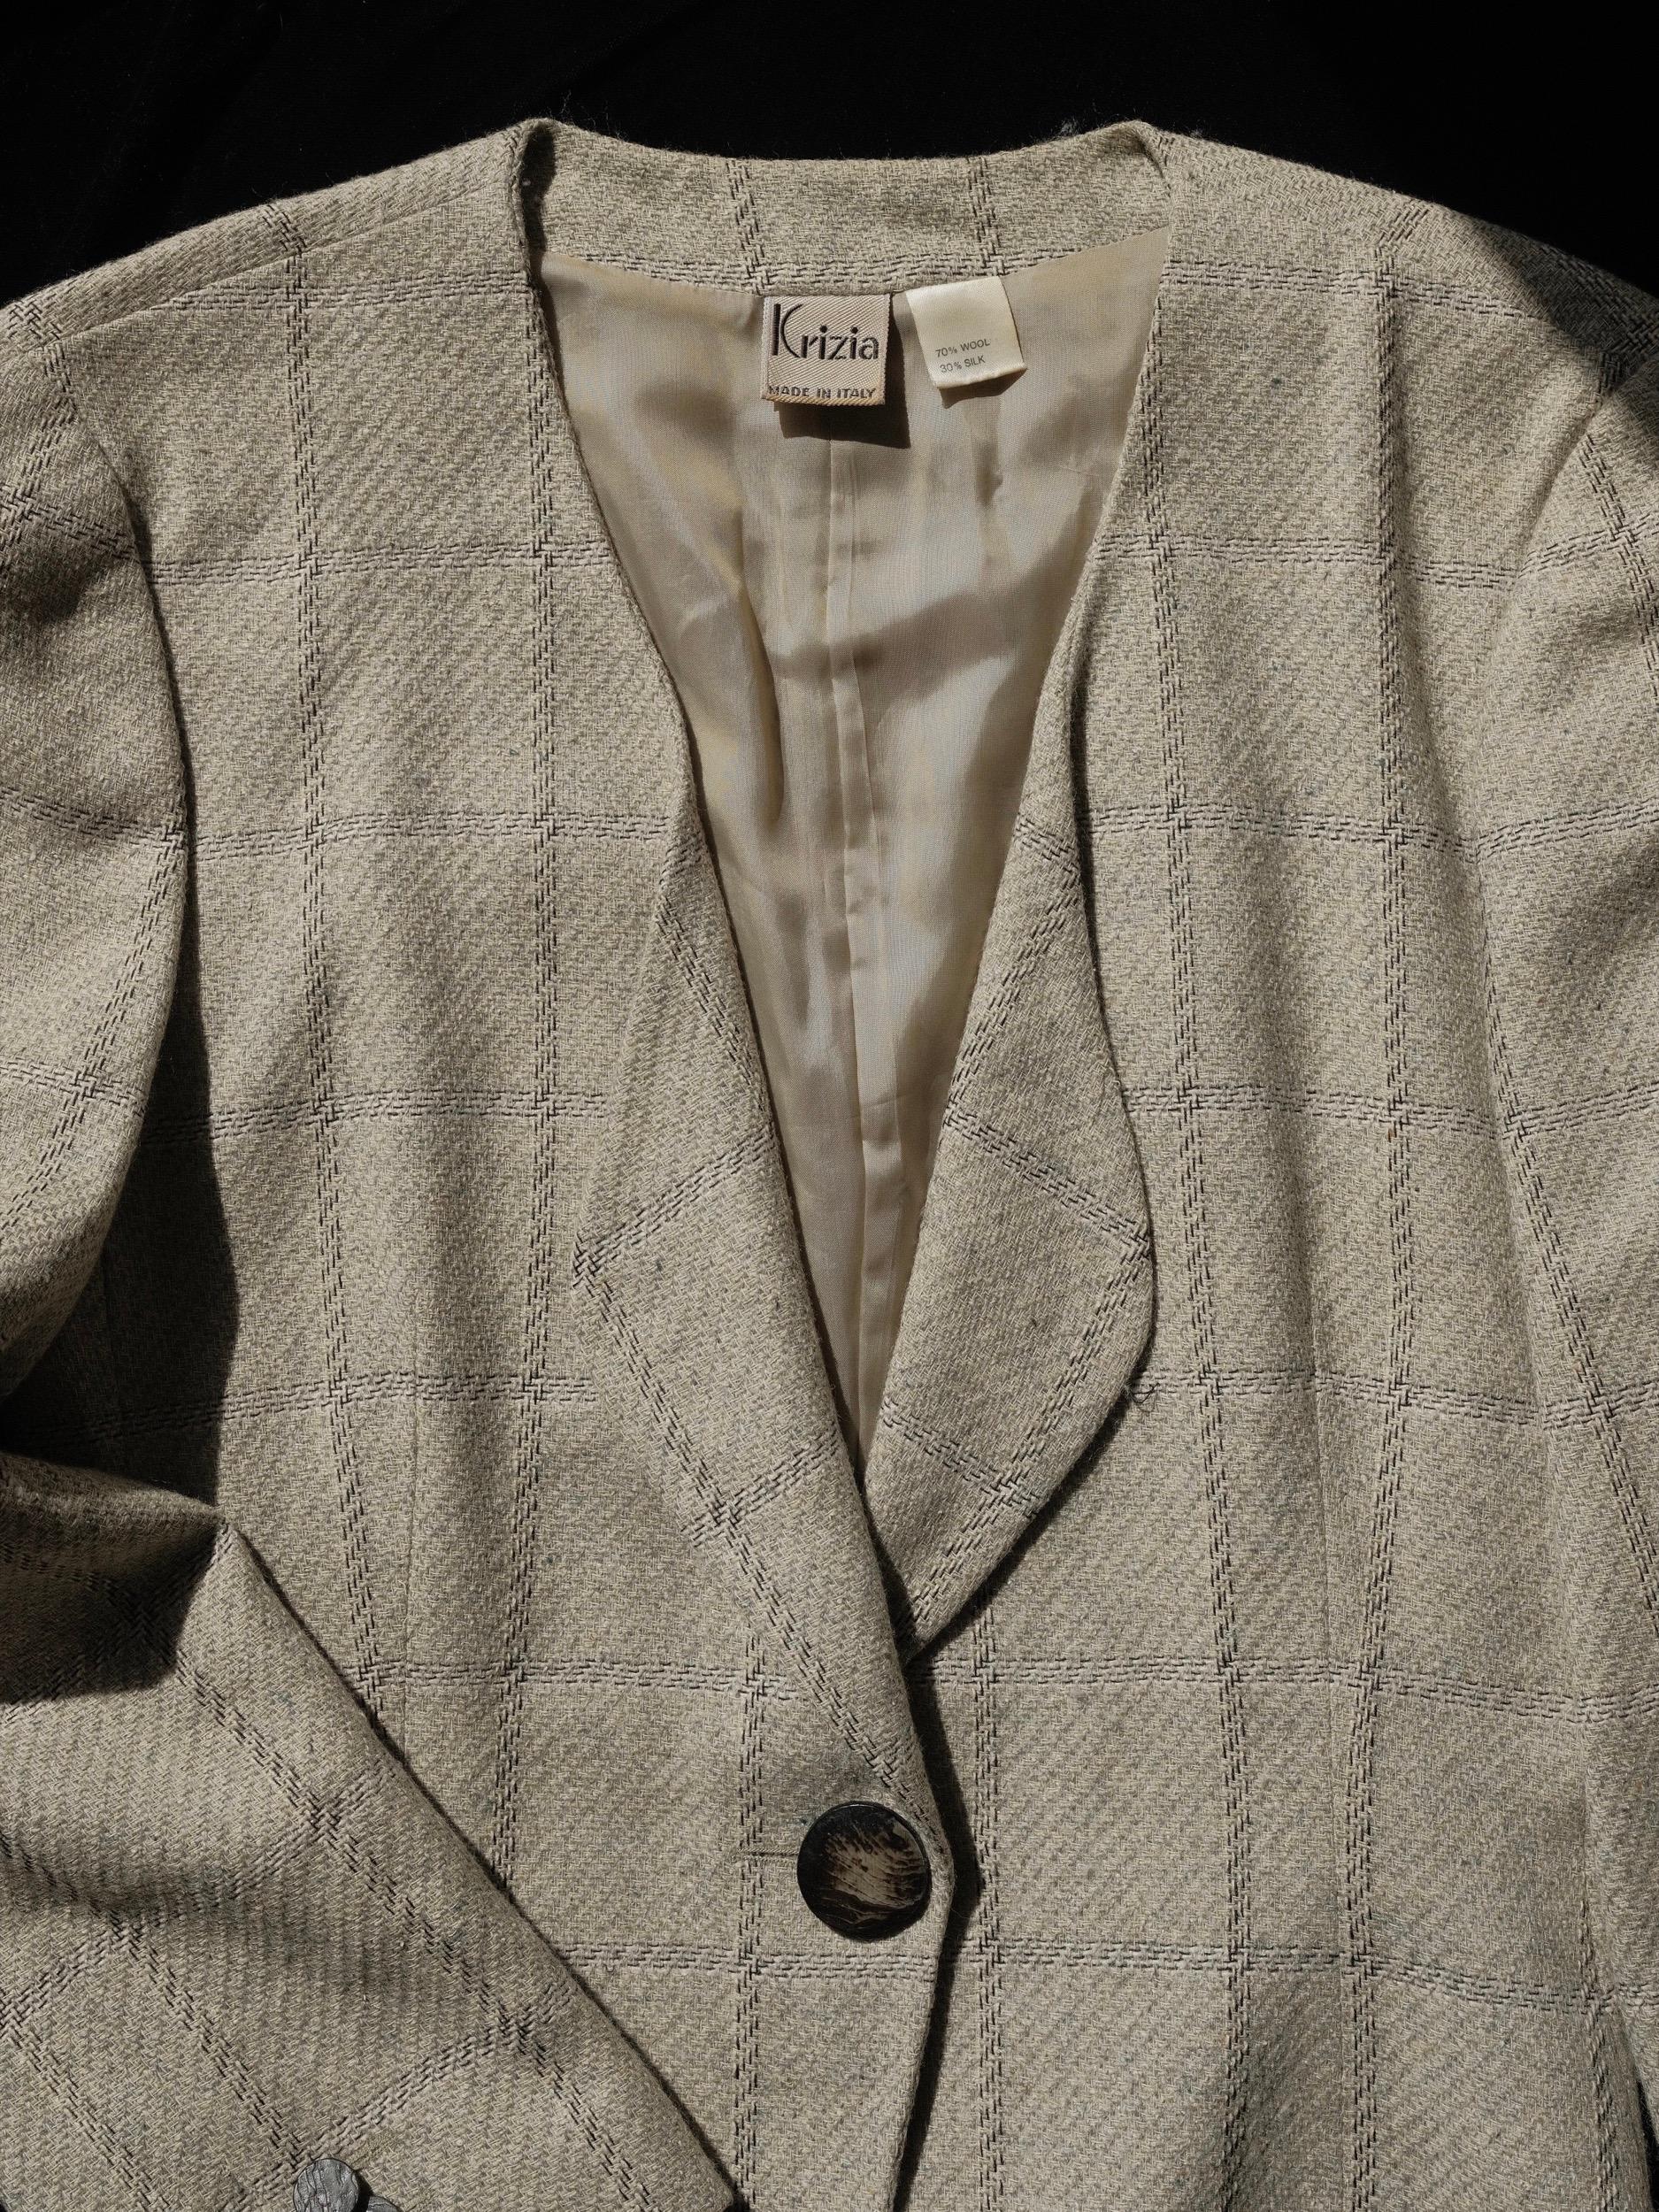 Krizia Plaid Wool and Silk Jacket 1980's Sz 42 For Sale 9